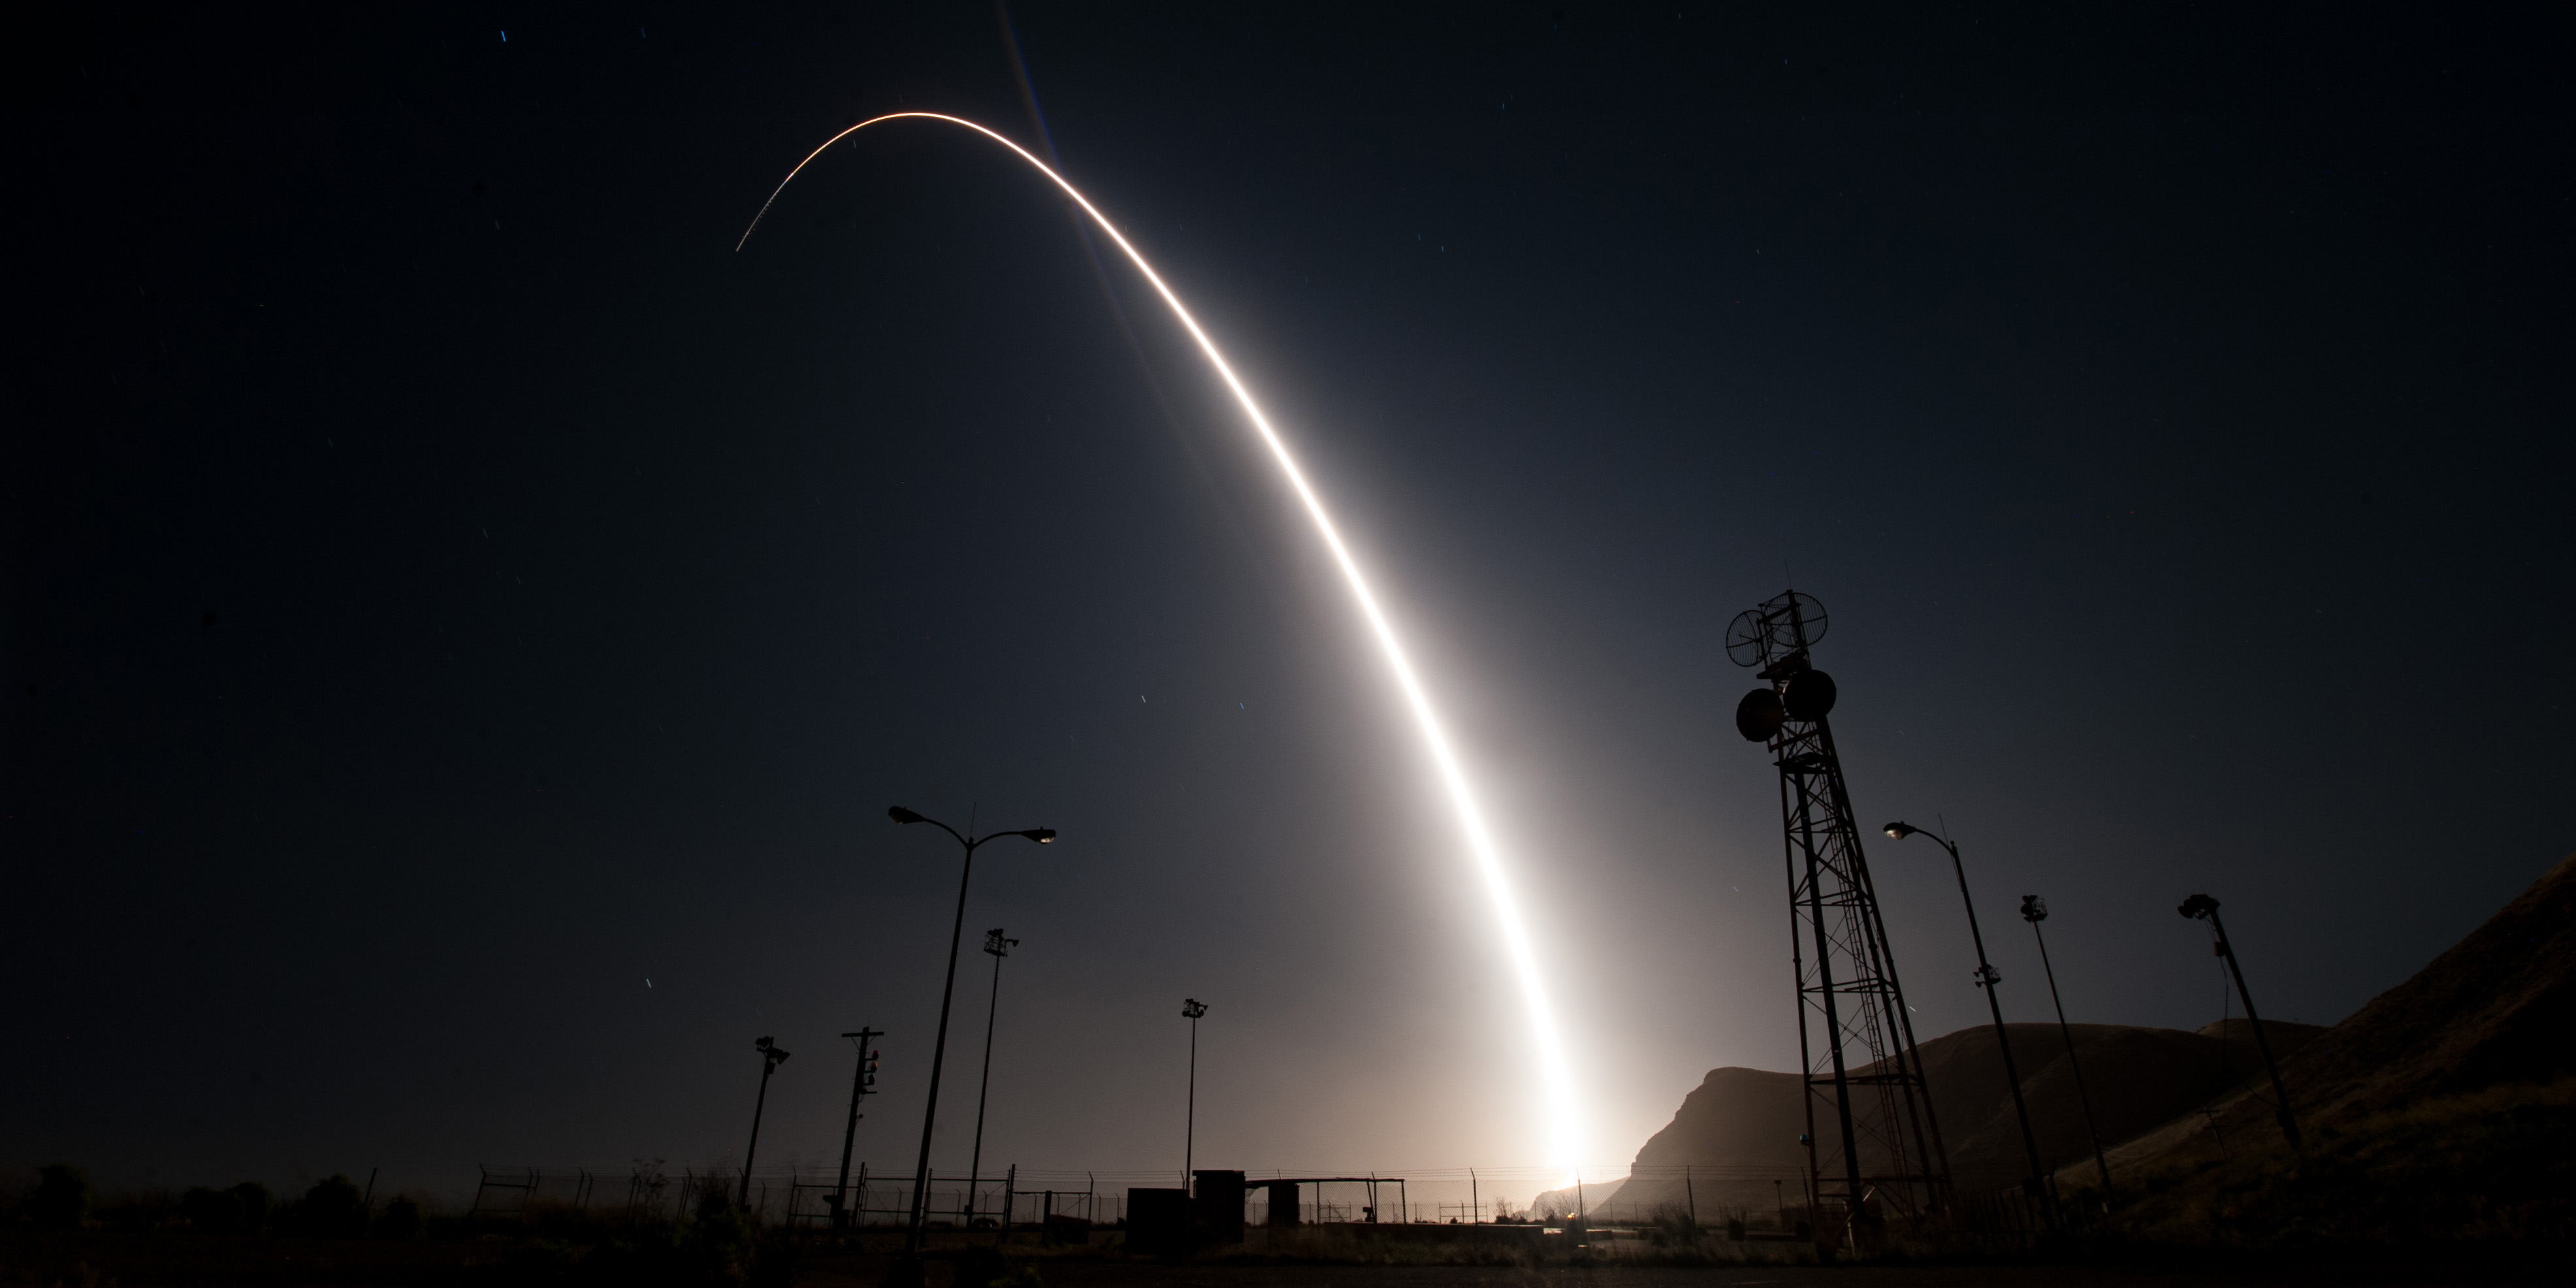 Minuteman rocket launch at night